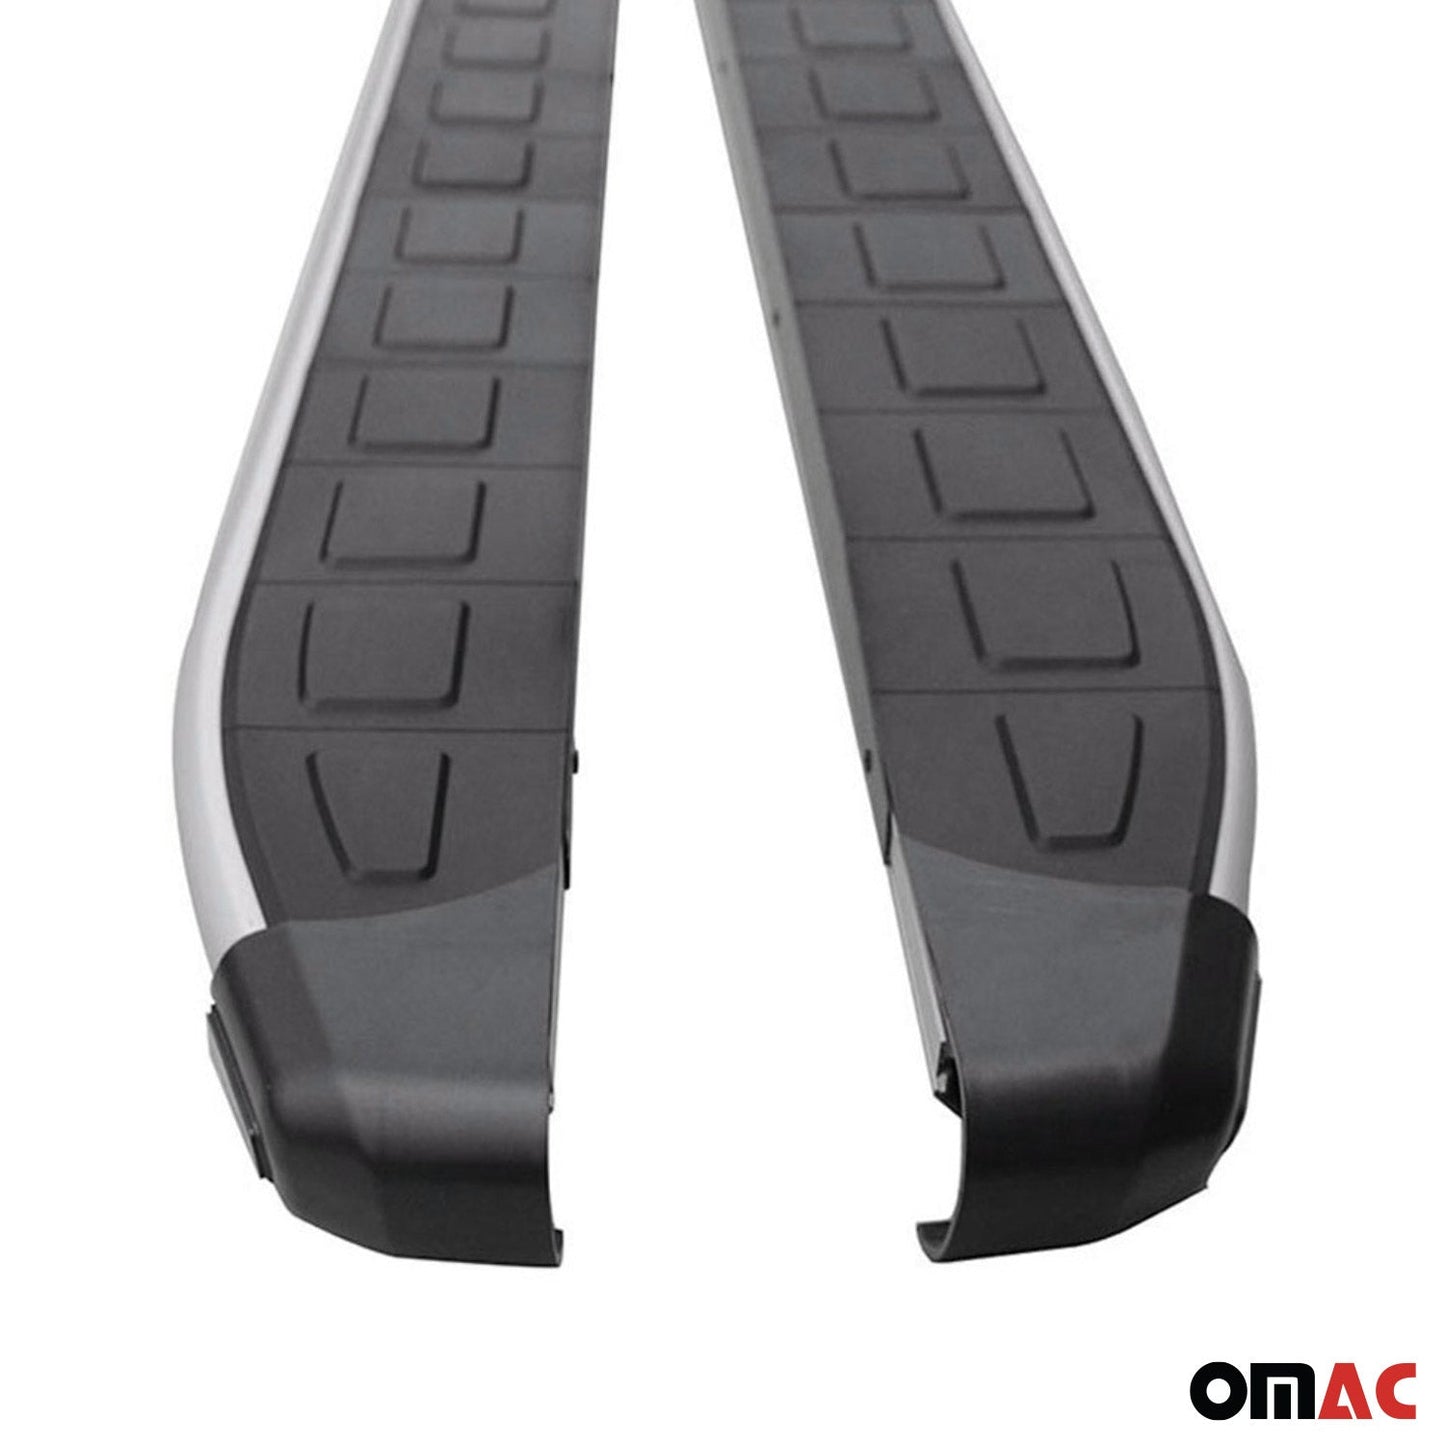 OMAC Running Boards Fits Chevrolet Captiva 2019-2020 Side Steps Nerf Bars 2 Pcs '1622974